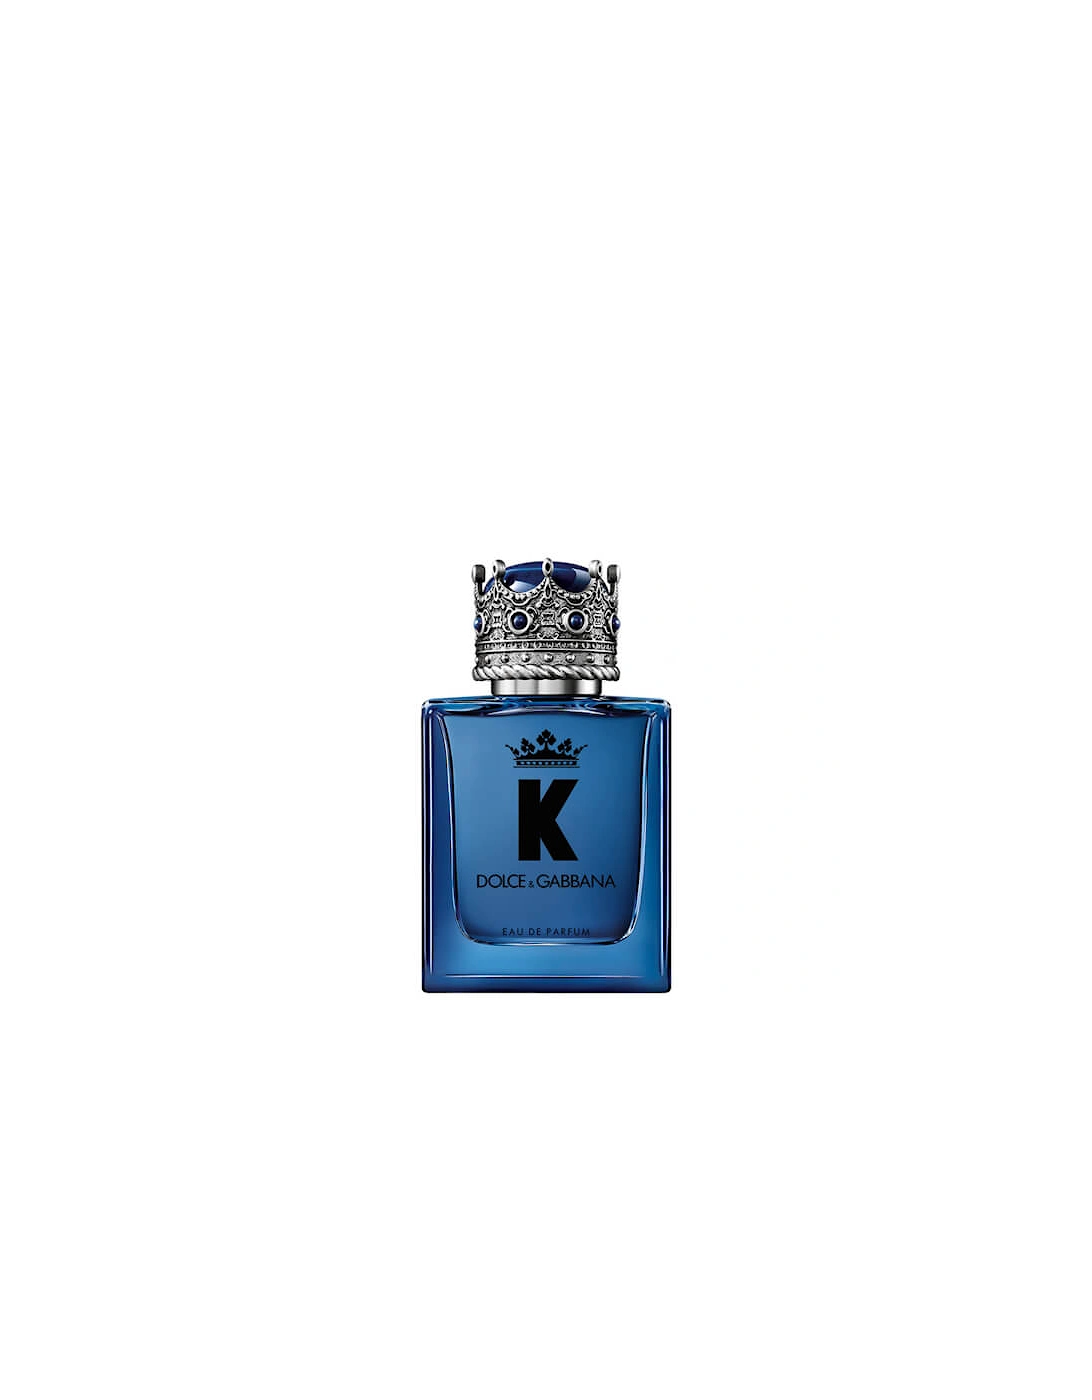 K by Dolce&Gabbana Eau de Parfum 50ml, 2 of 1